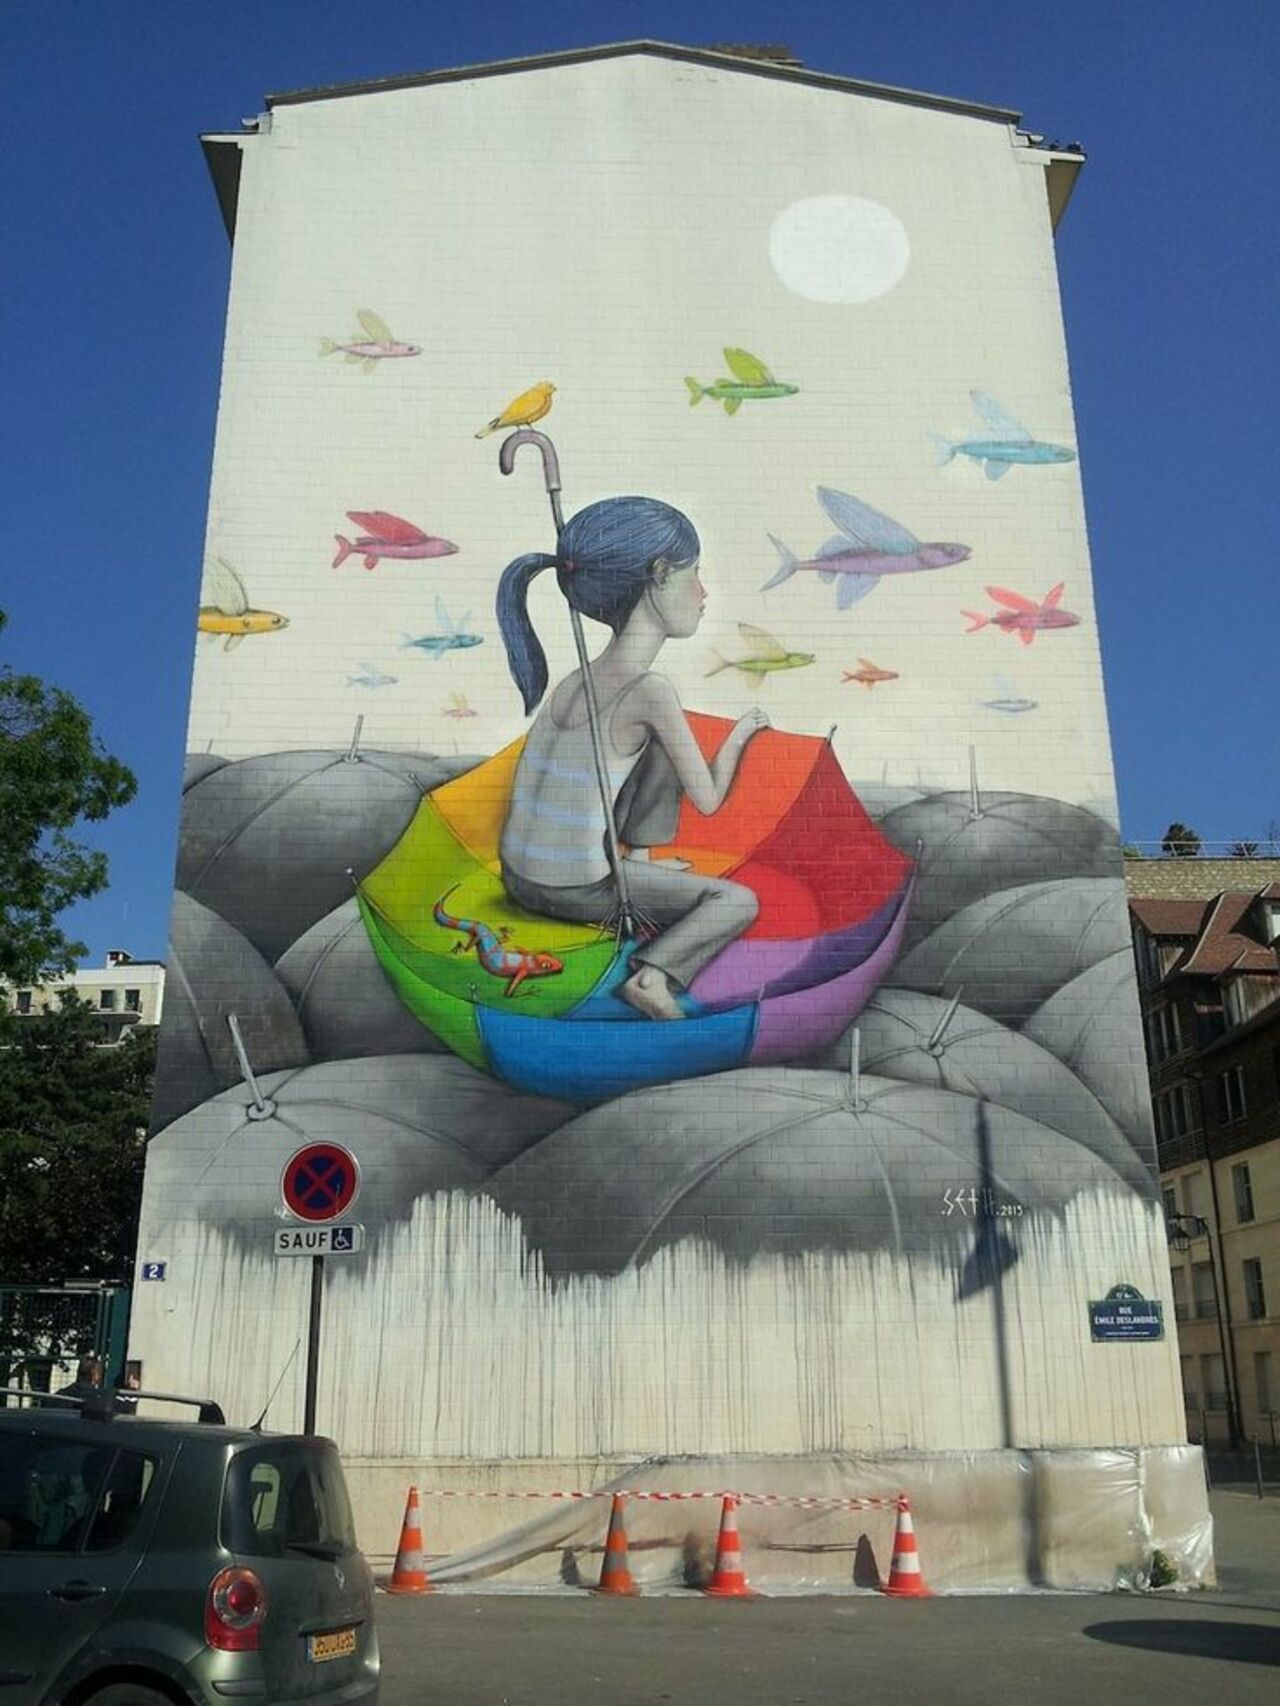 Mural by Seth in Paris, France#streetart #mural #graffiti #art https://t.co/acvoXa5fbp